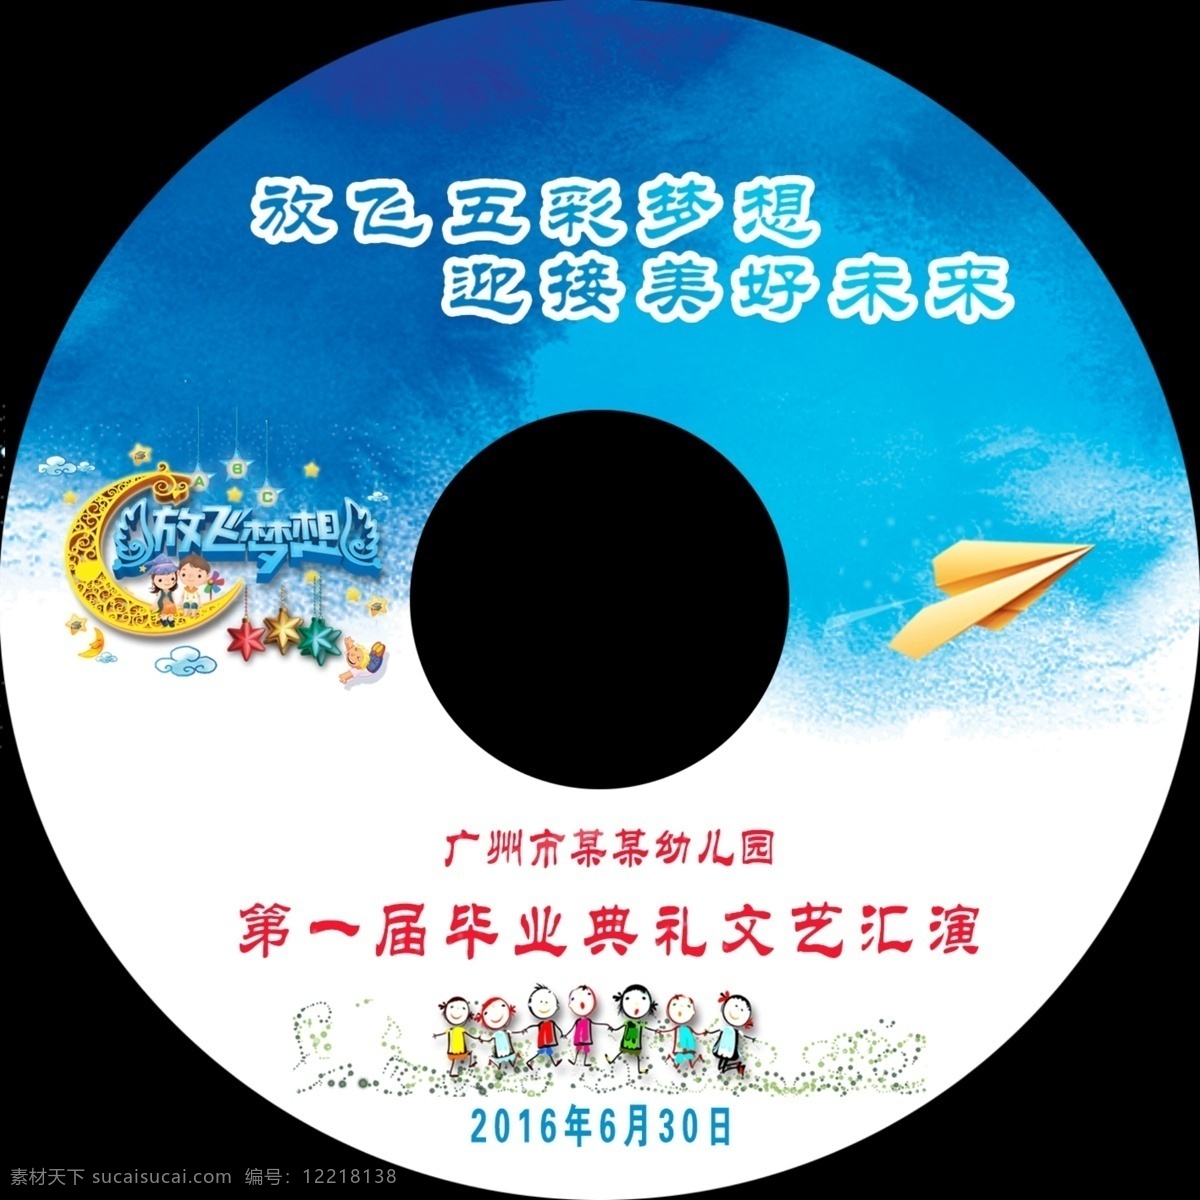 dvd 光盘 贴纸 dvd光盘 cd光碟 蓝光碟 碟片贴设计 设计图库 包装设计